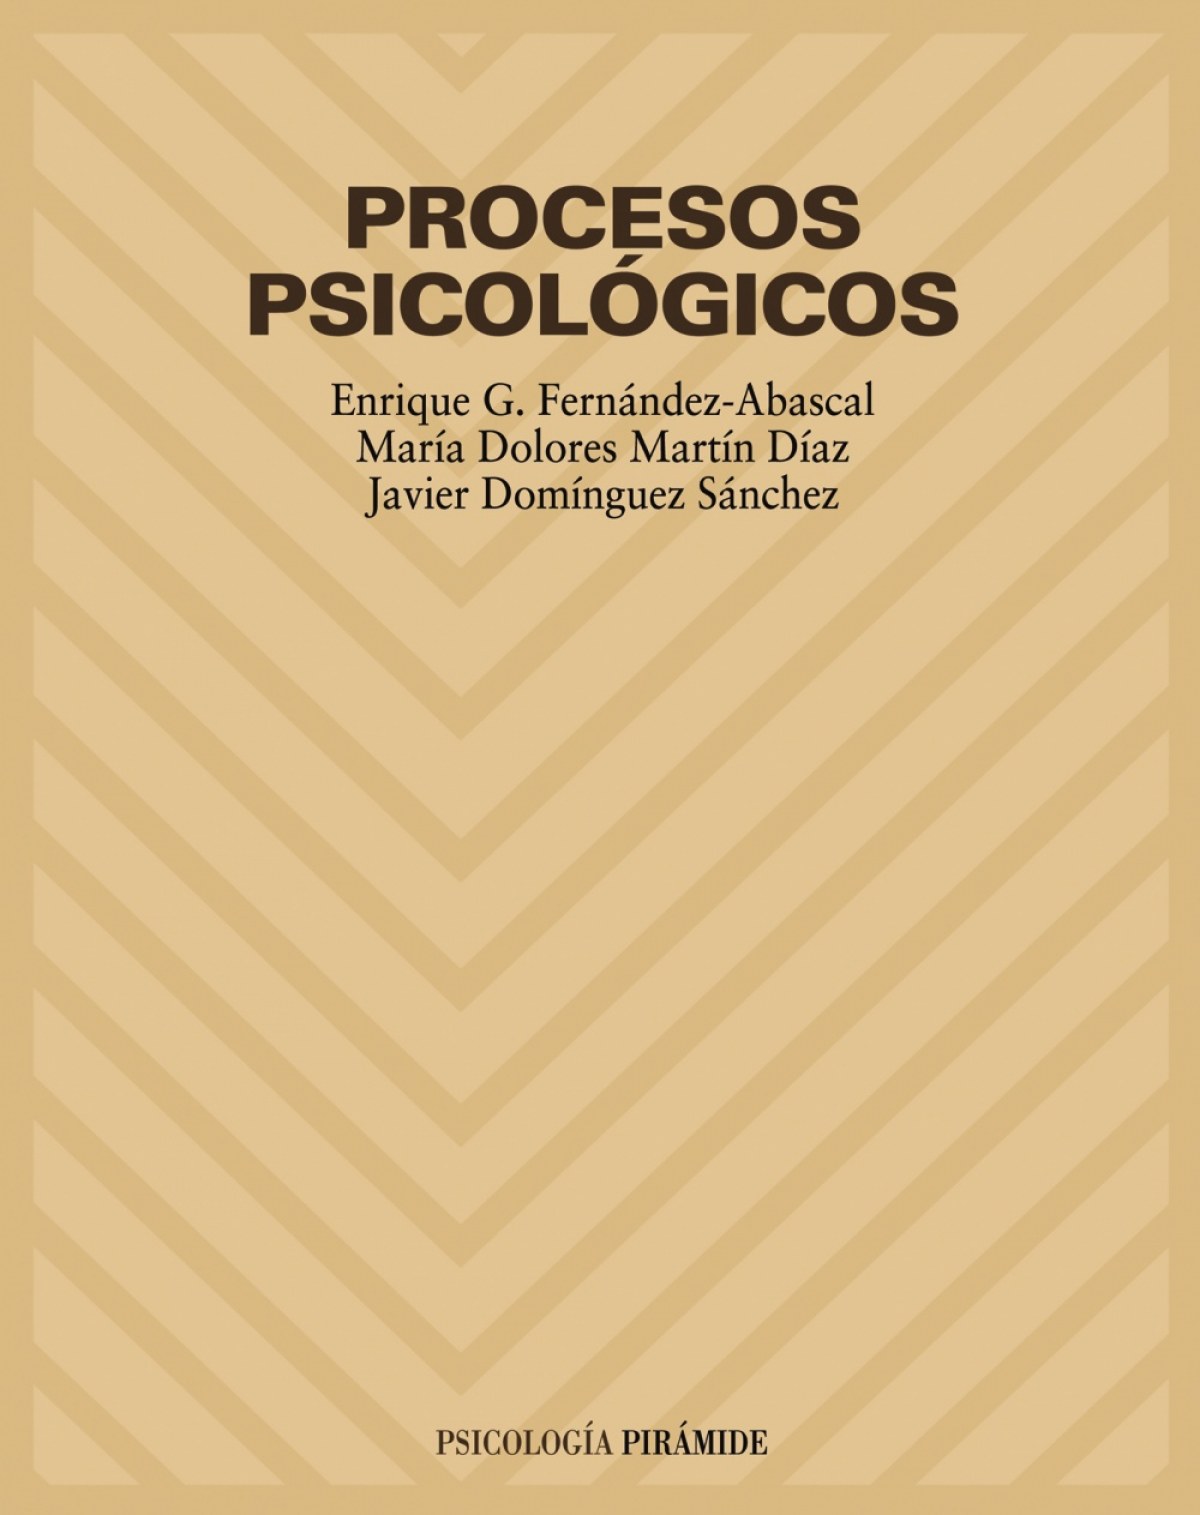 Procesos psicologicos/psicologia - G. Fernández-Abascal, Enrique/Martín Díaz, María Dolores/Domínguez Sánchez, F. Javier